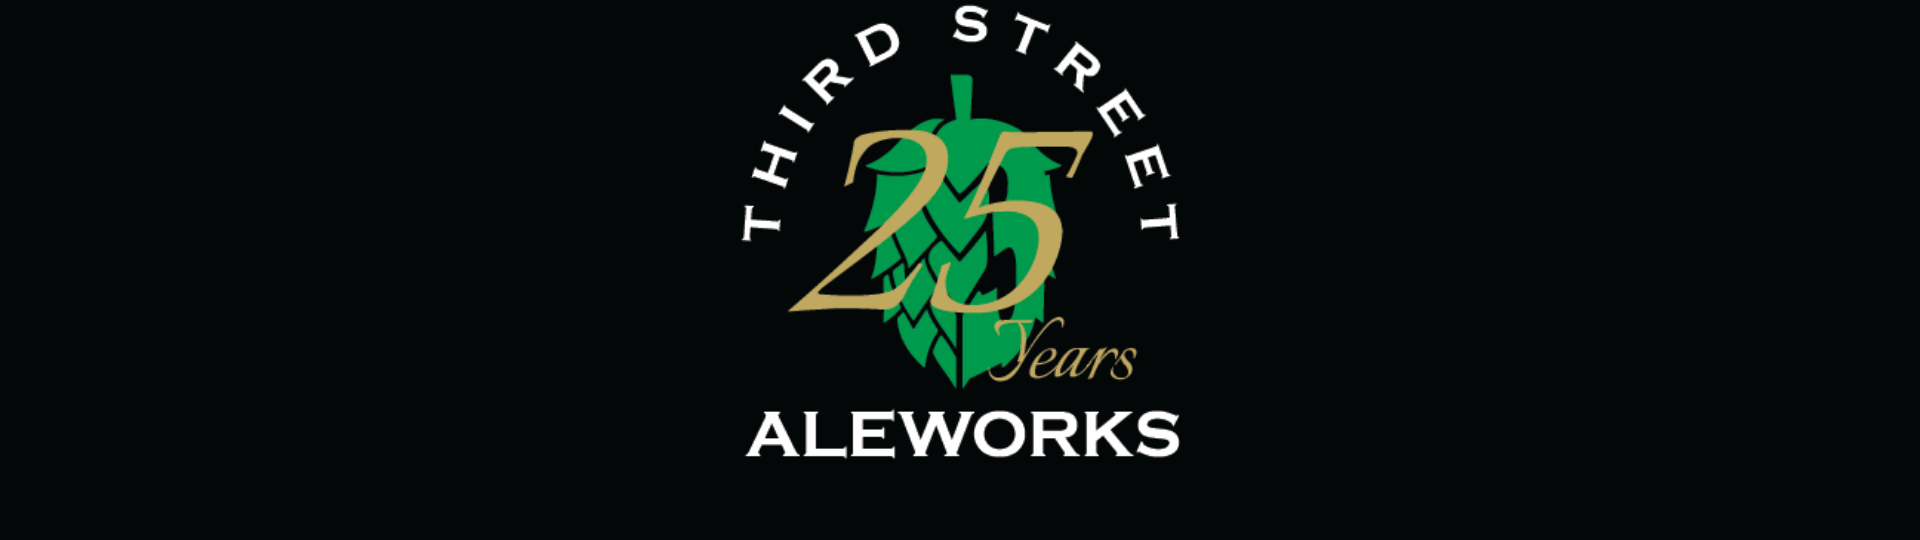 third street aleworks 25 years logo